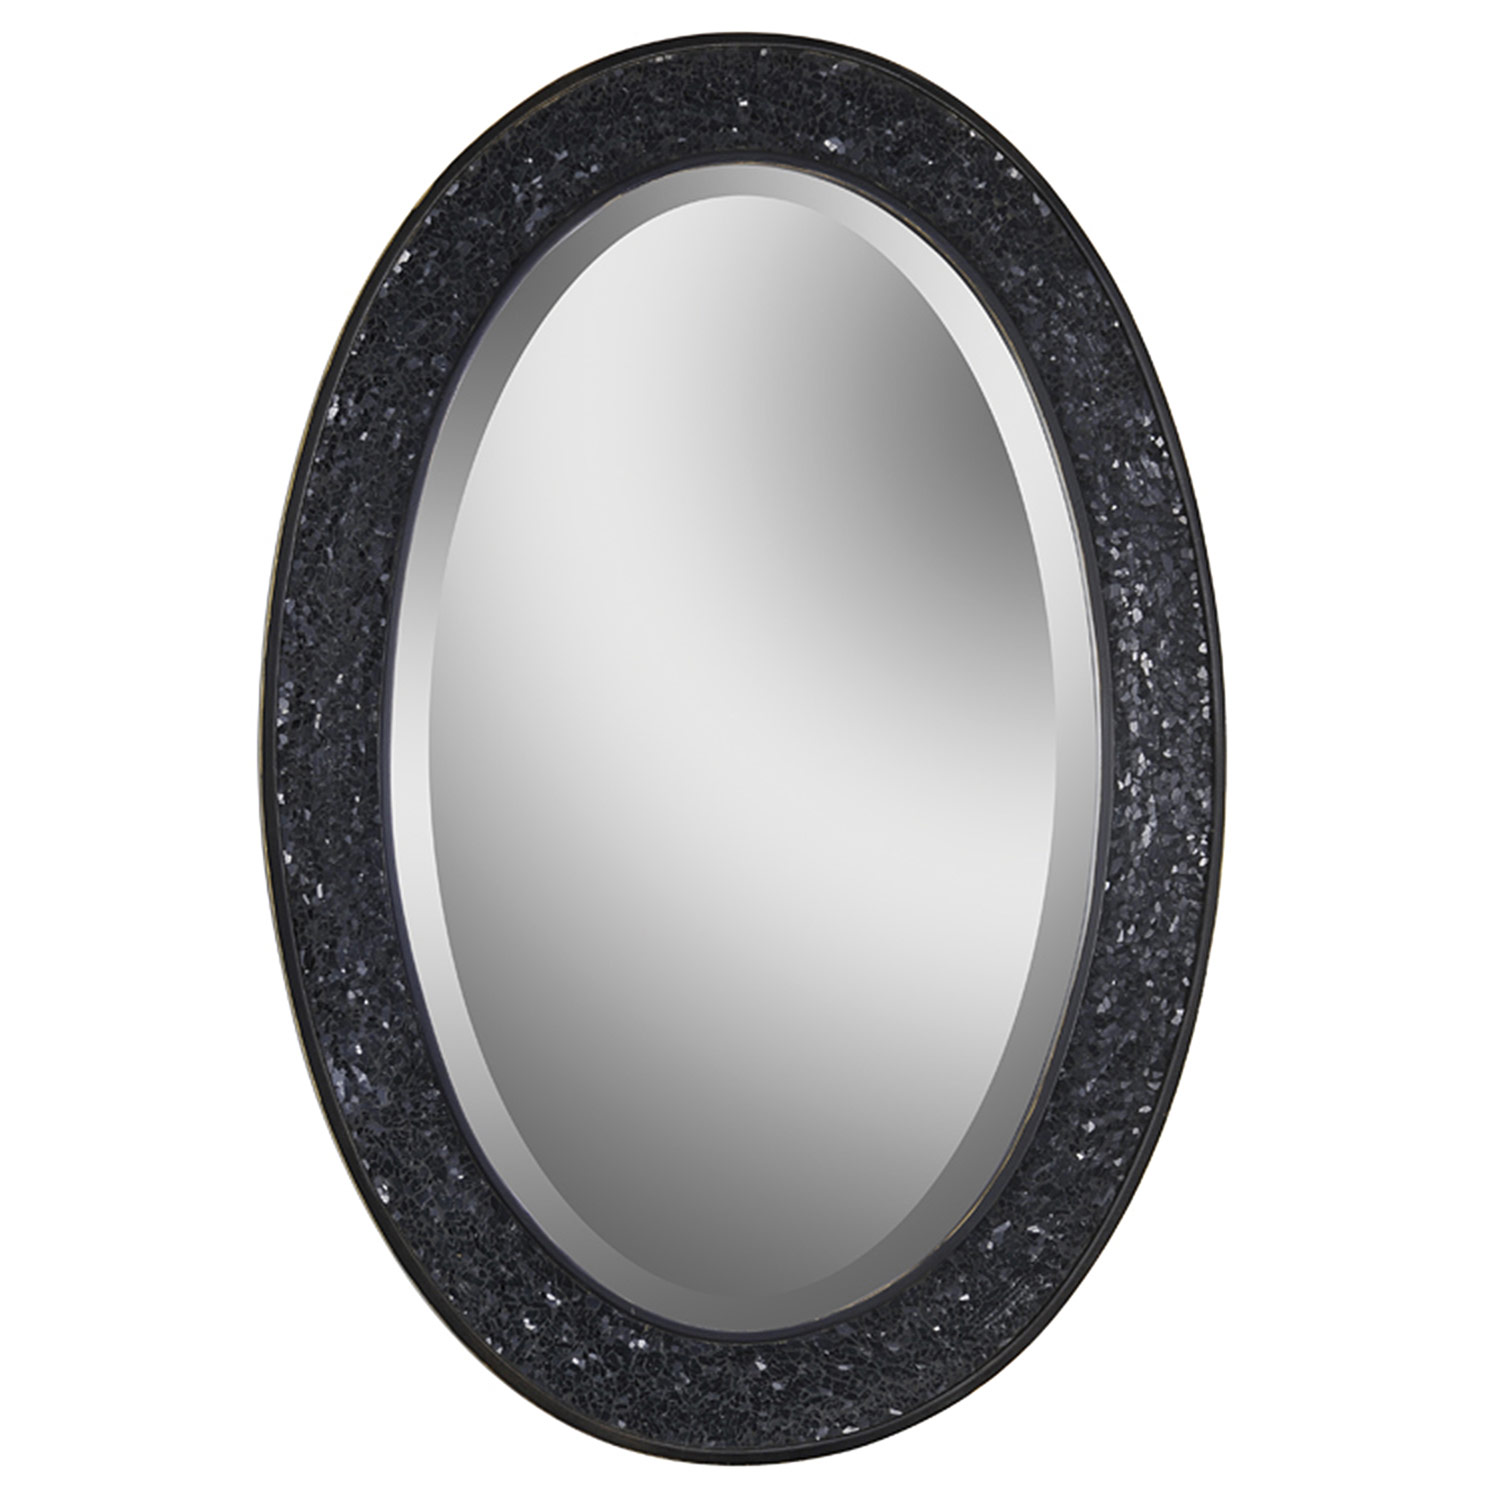 Ren-Wil Harmony Oval Mirror - Black